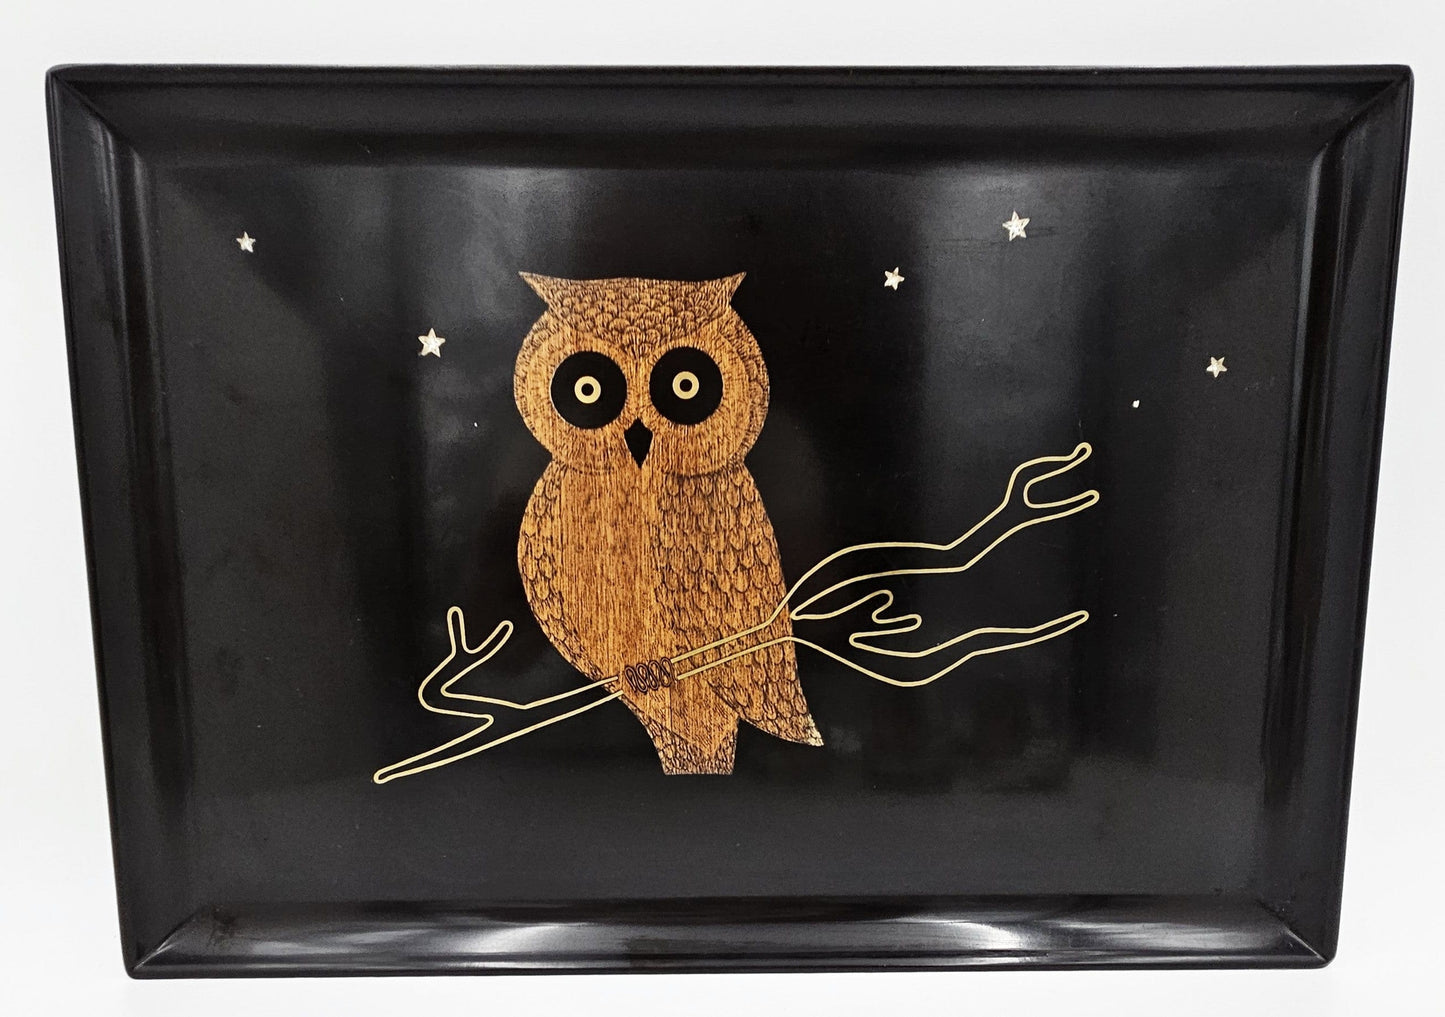 Georges Briard Serveware Georges Briard 22k Gold DOF Owl Glassware Set w/ Couroc Owl Tray Circa 1960's